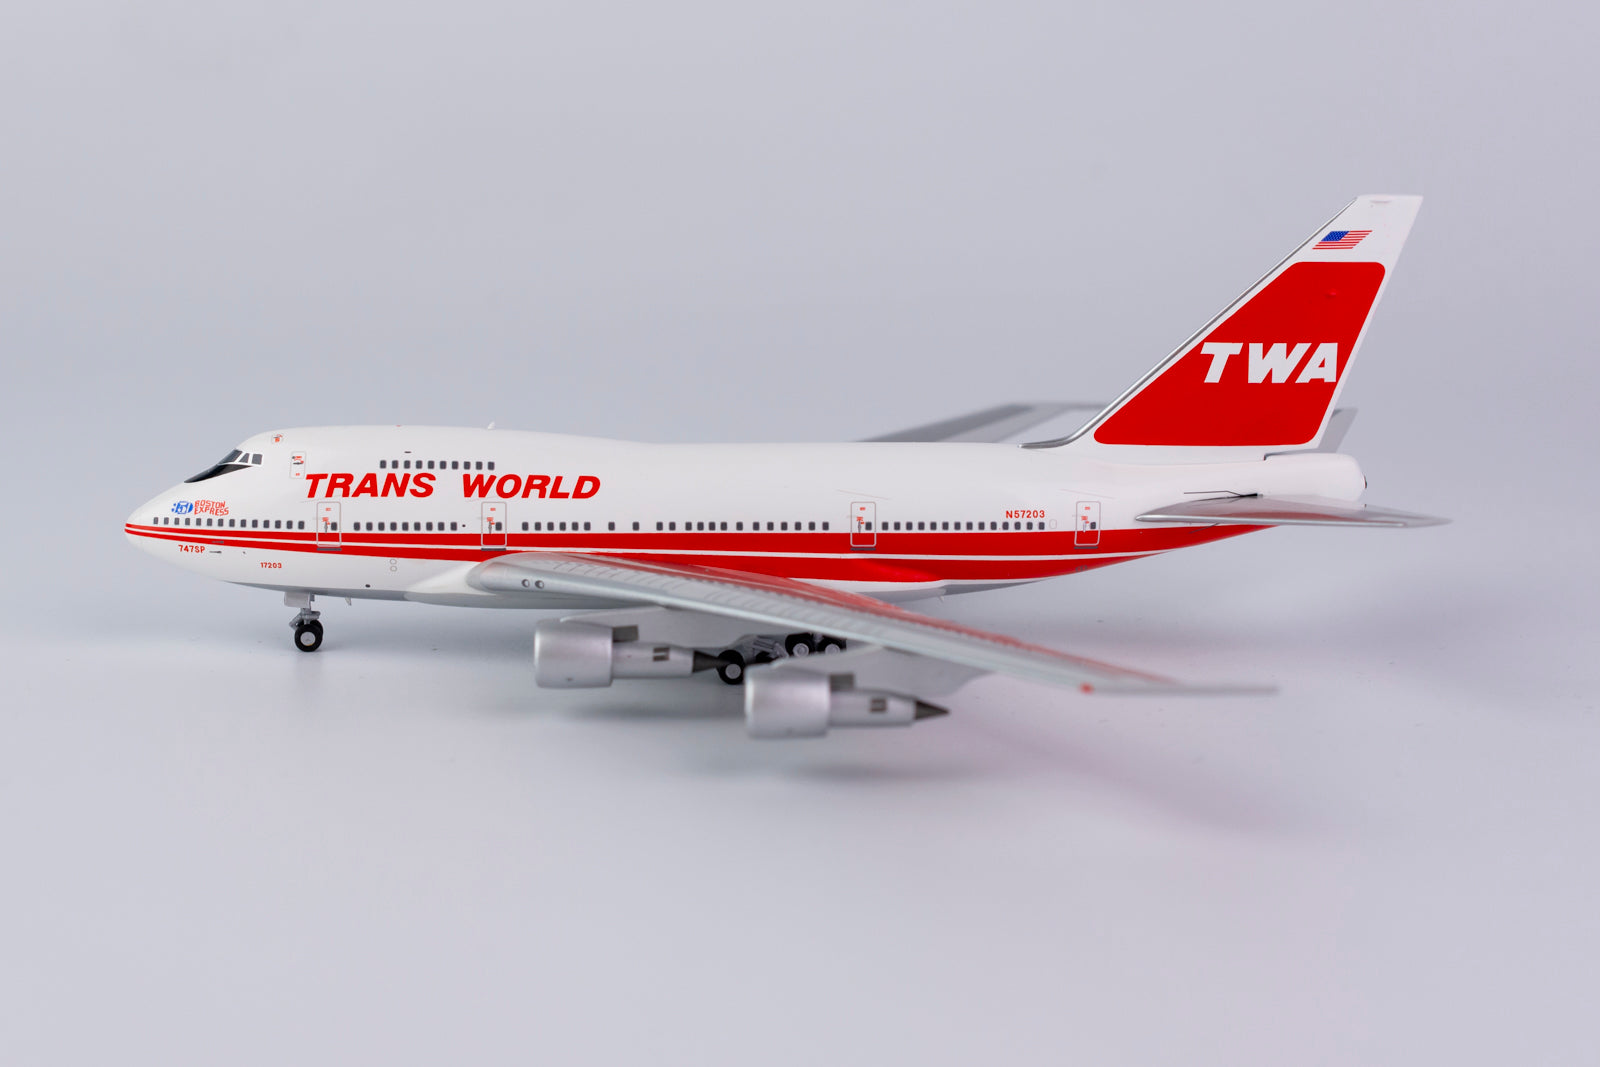 What Happened To TWA's Boeing 747s?